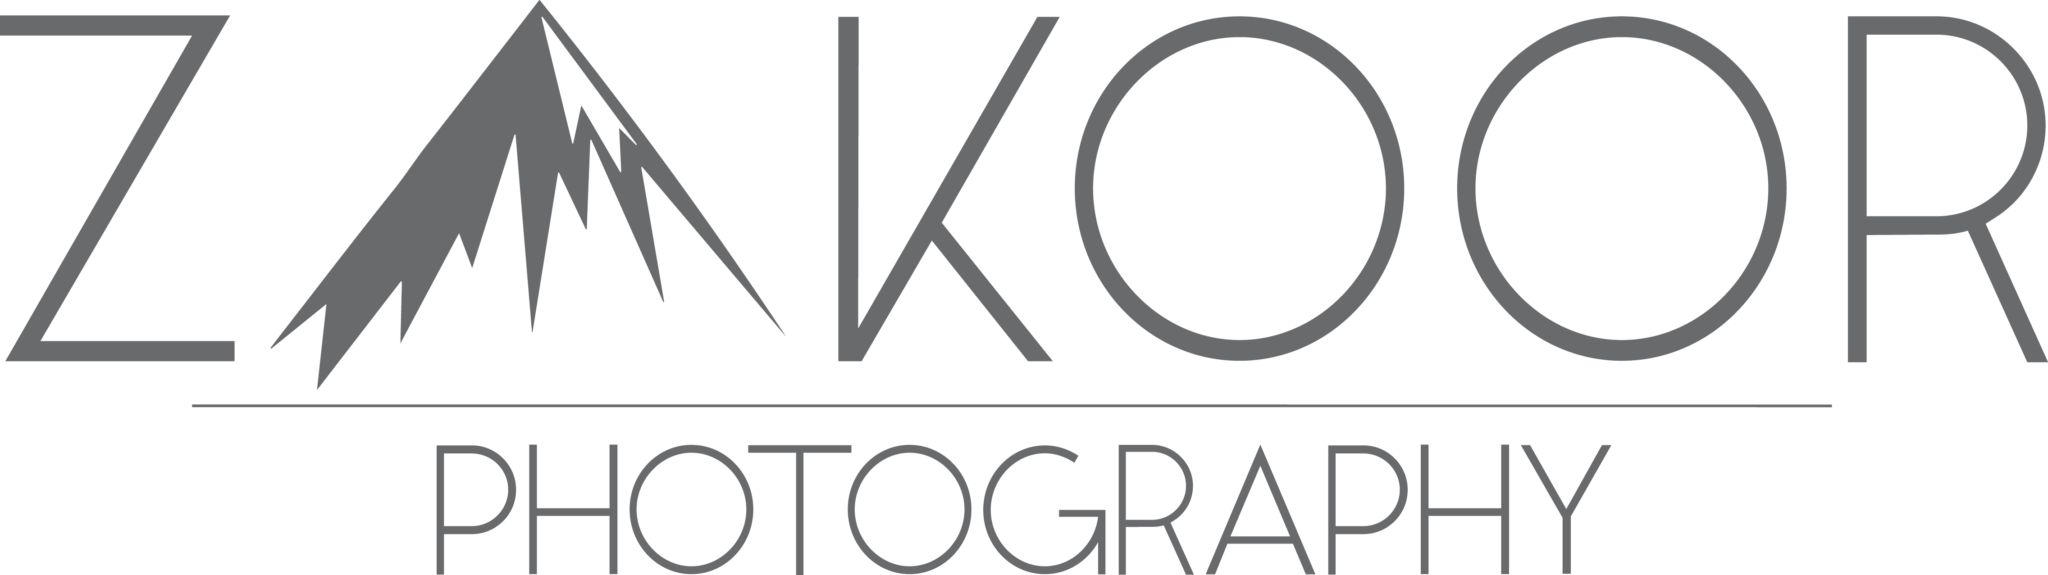 Zakoor Photography